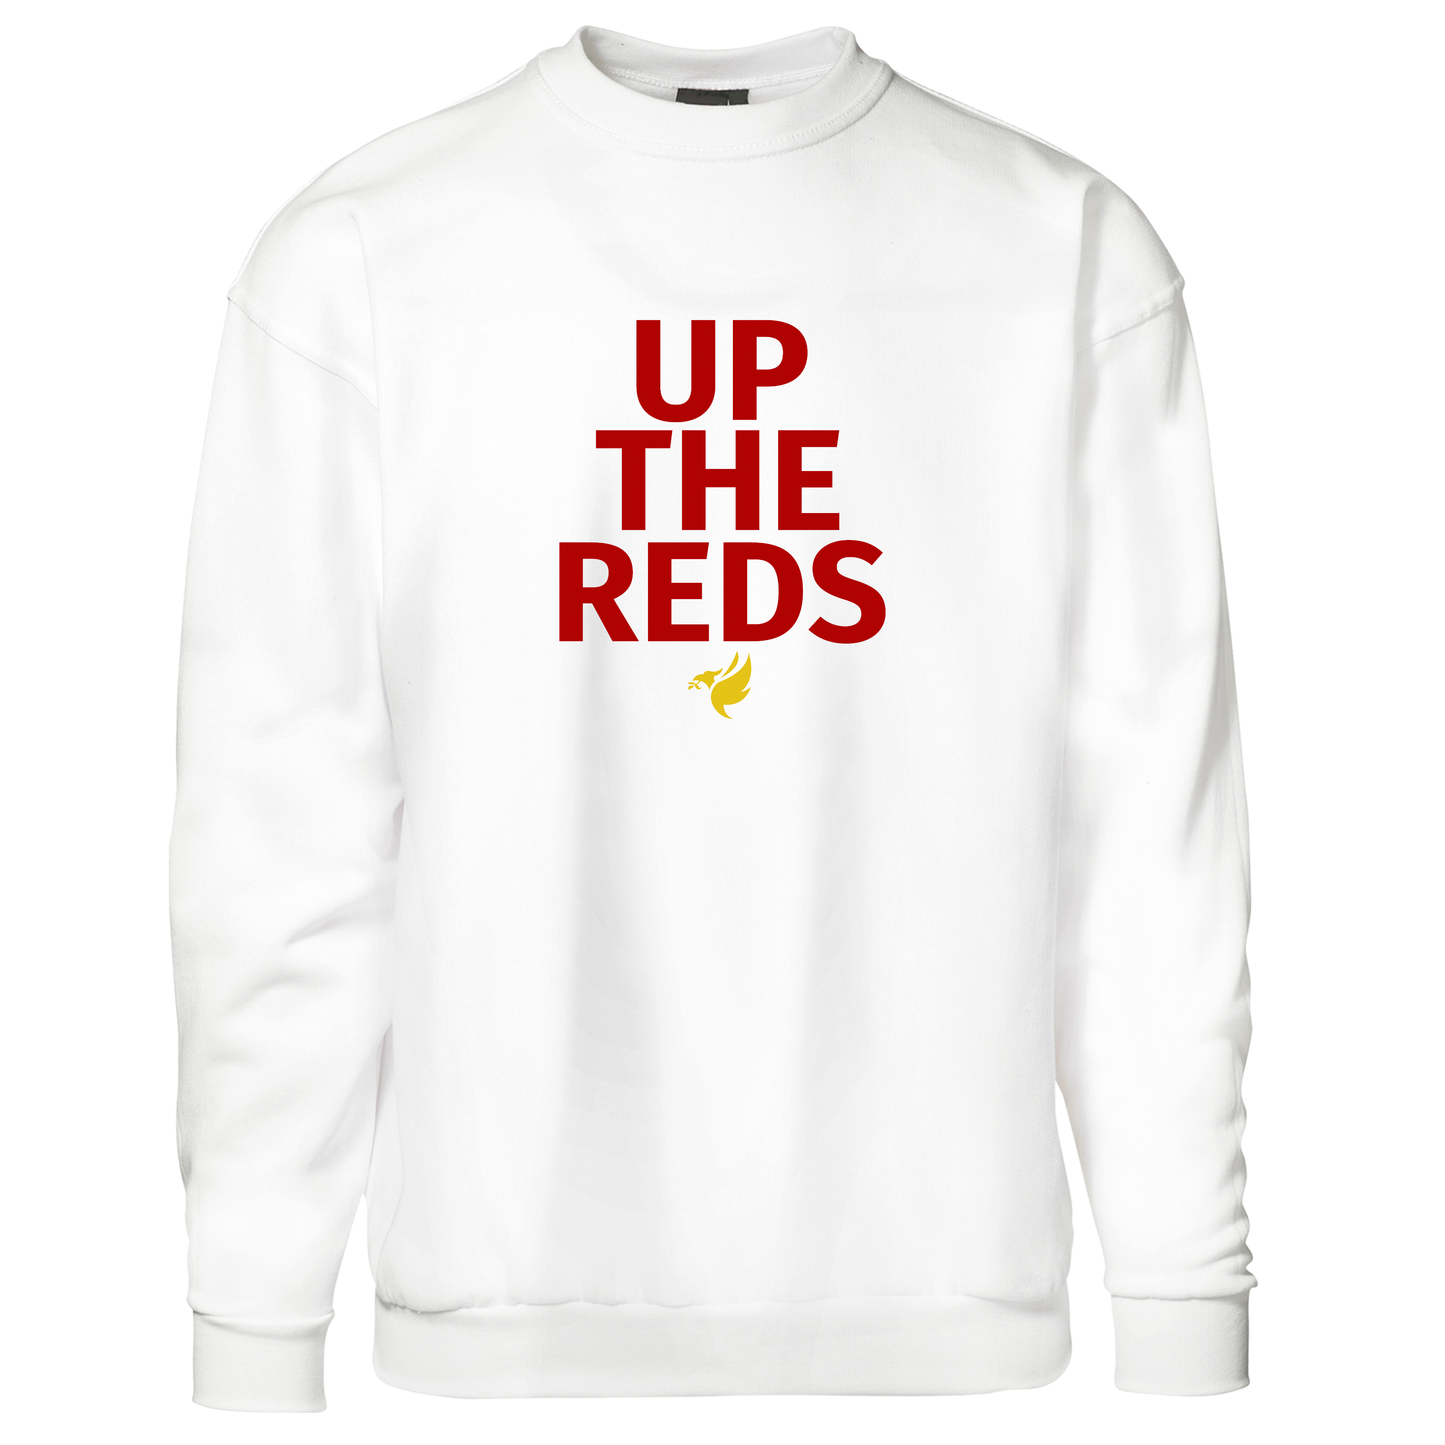 Up The Reds - Sweatshirt